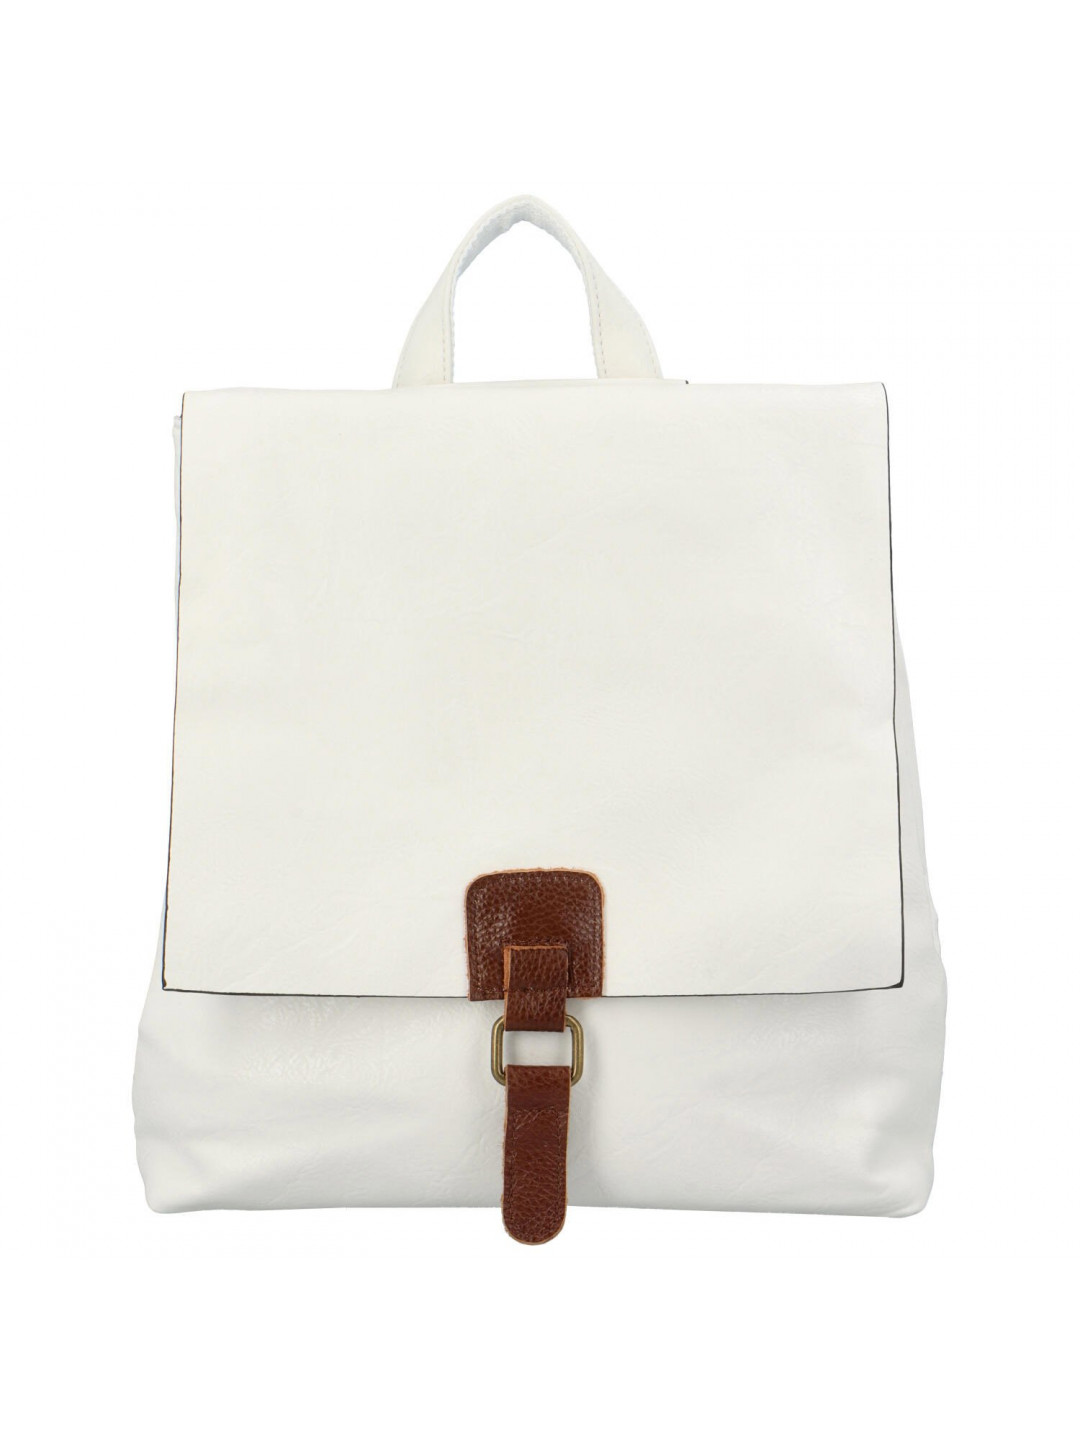 Dámský kabelko batoh bílý – Paolo bags Olefir